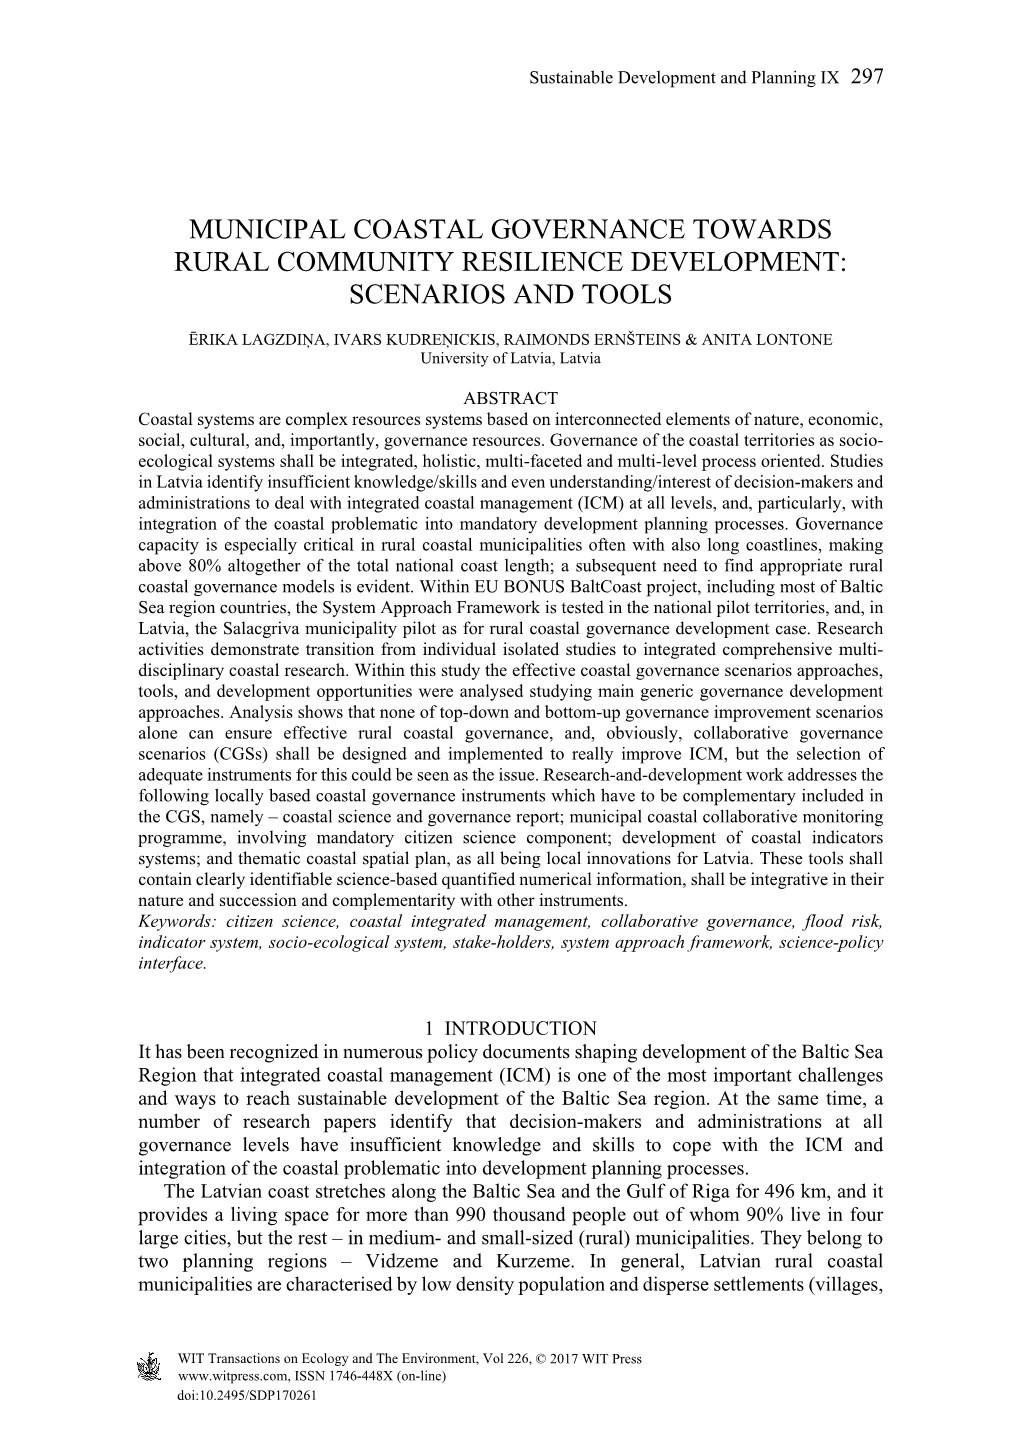 Municipal Coastal Governance Towards Rural Community Resilience Development: Scenarios and Tools